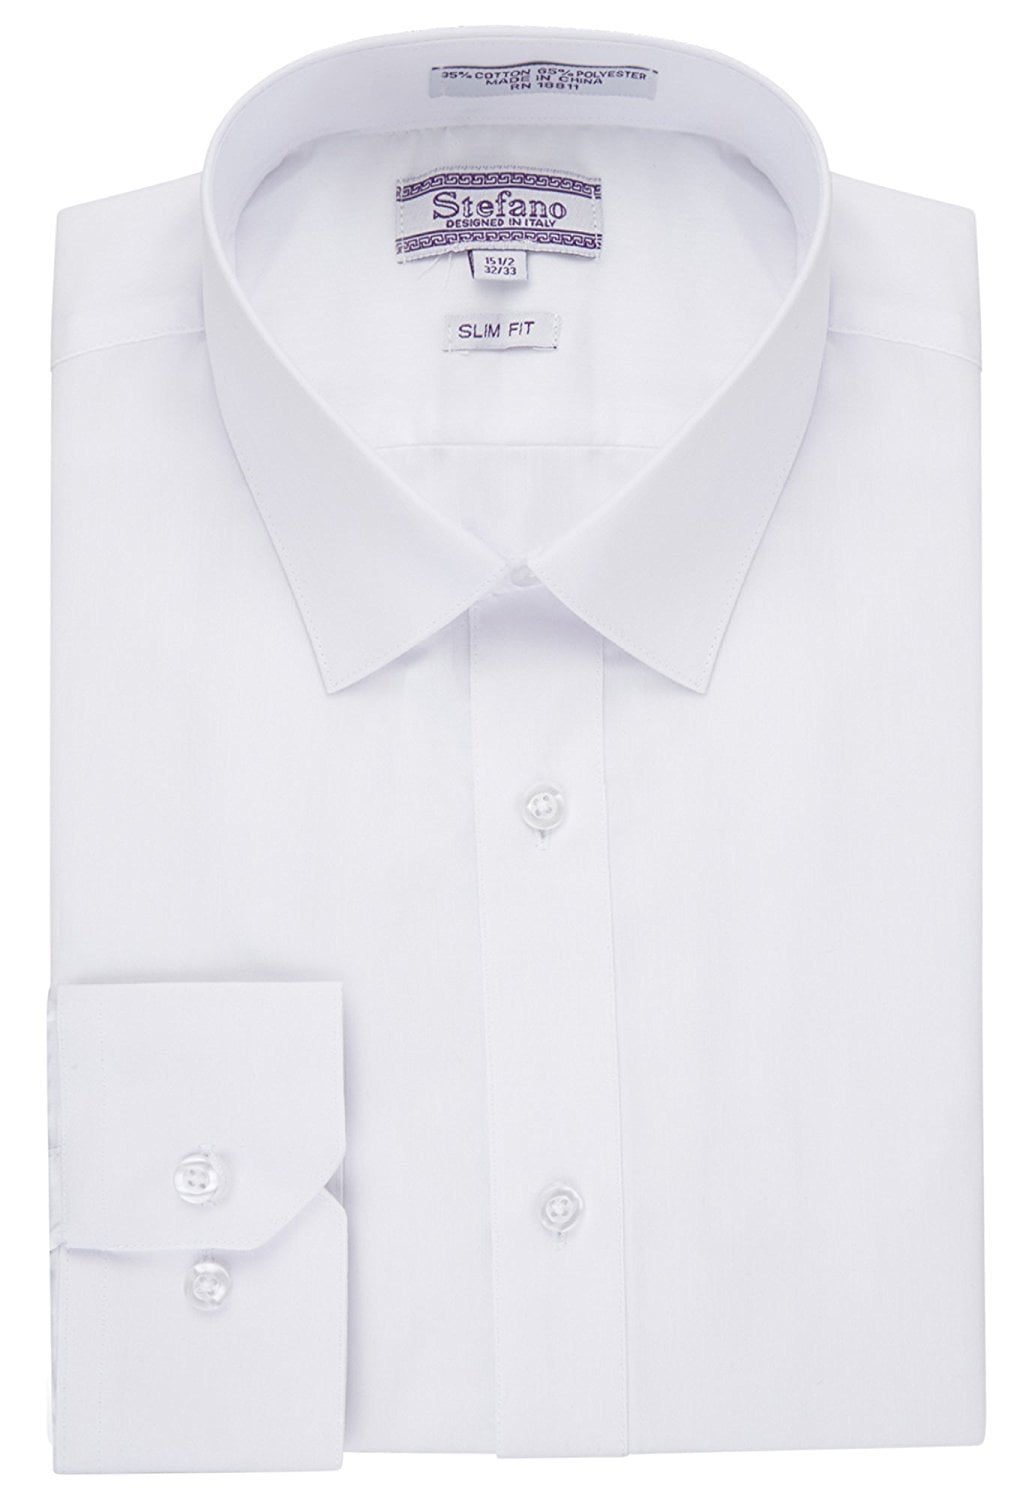 Dakloos Duplicatie mineraal Stefano Men's 5018BS Slim Fit Solid Dress Shirt - White - 17 6-7 -  Walmart.com